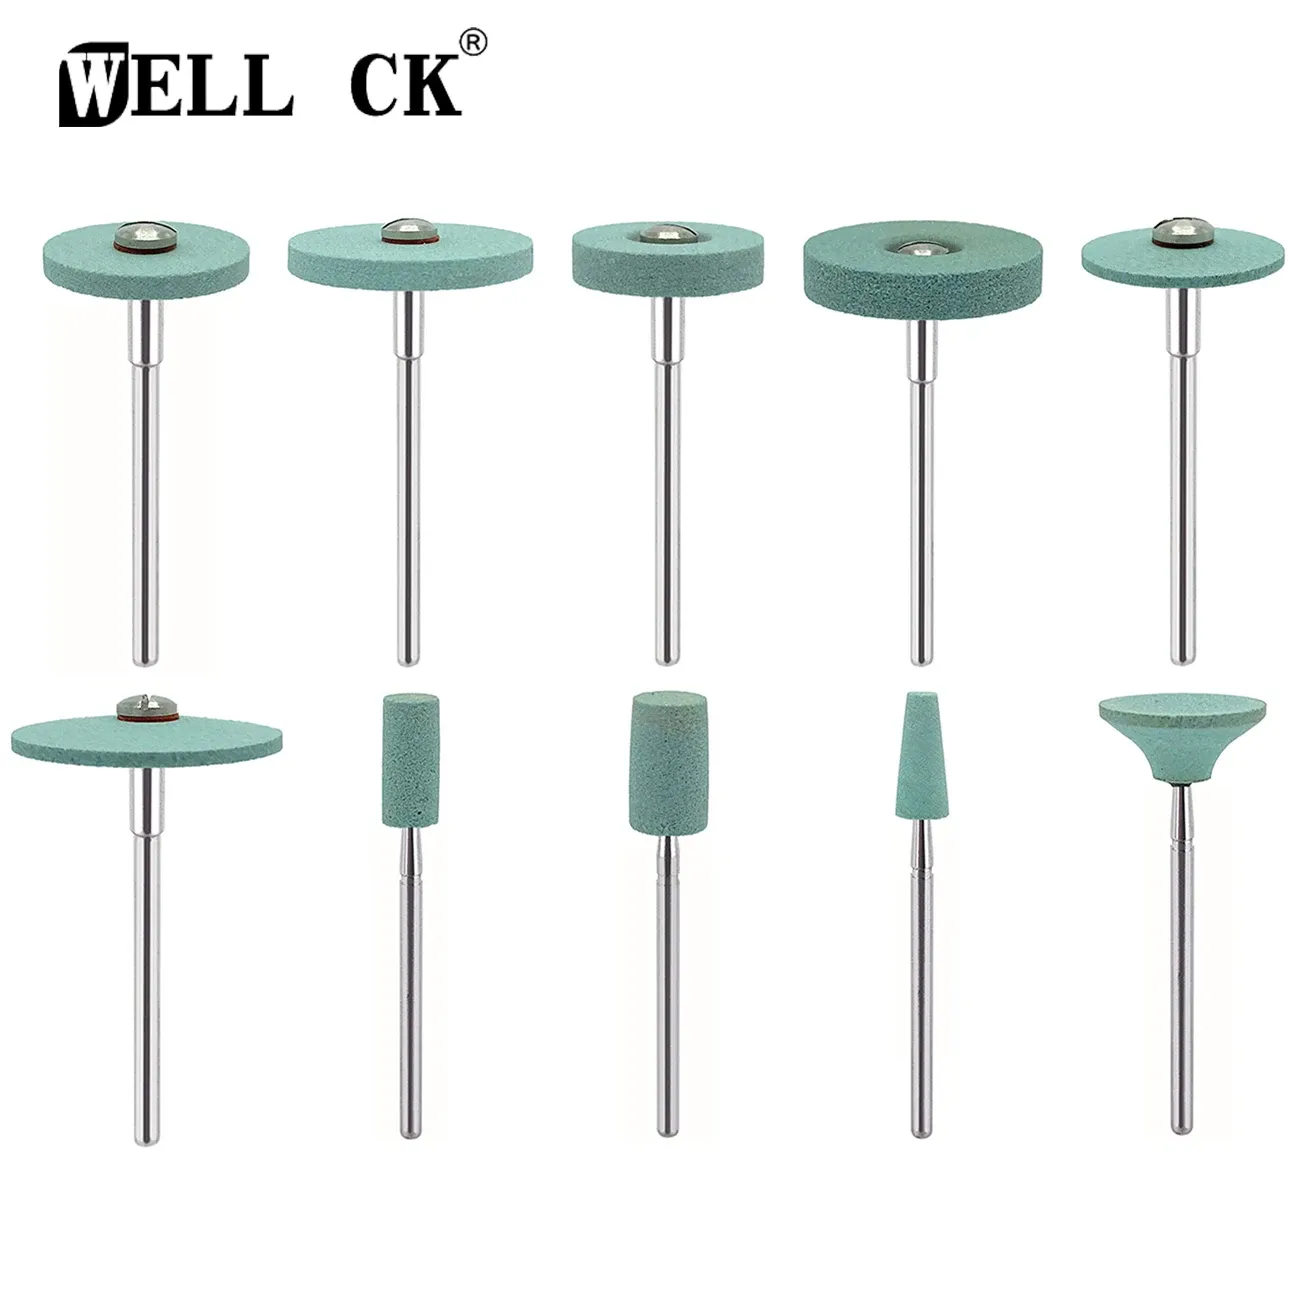 wellck 1pcs歯科用セラミックダイヤモンドポーシングヘッドグラインダージルコニア磁器シャンク直径2.35mm